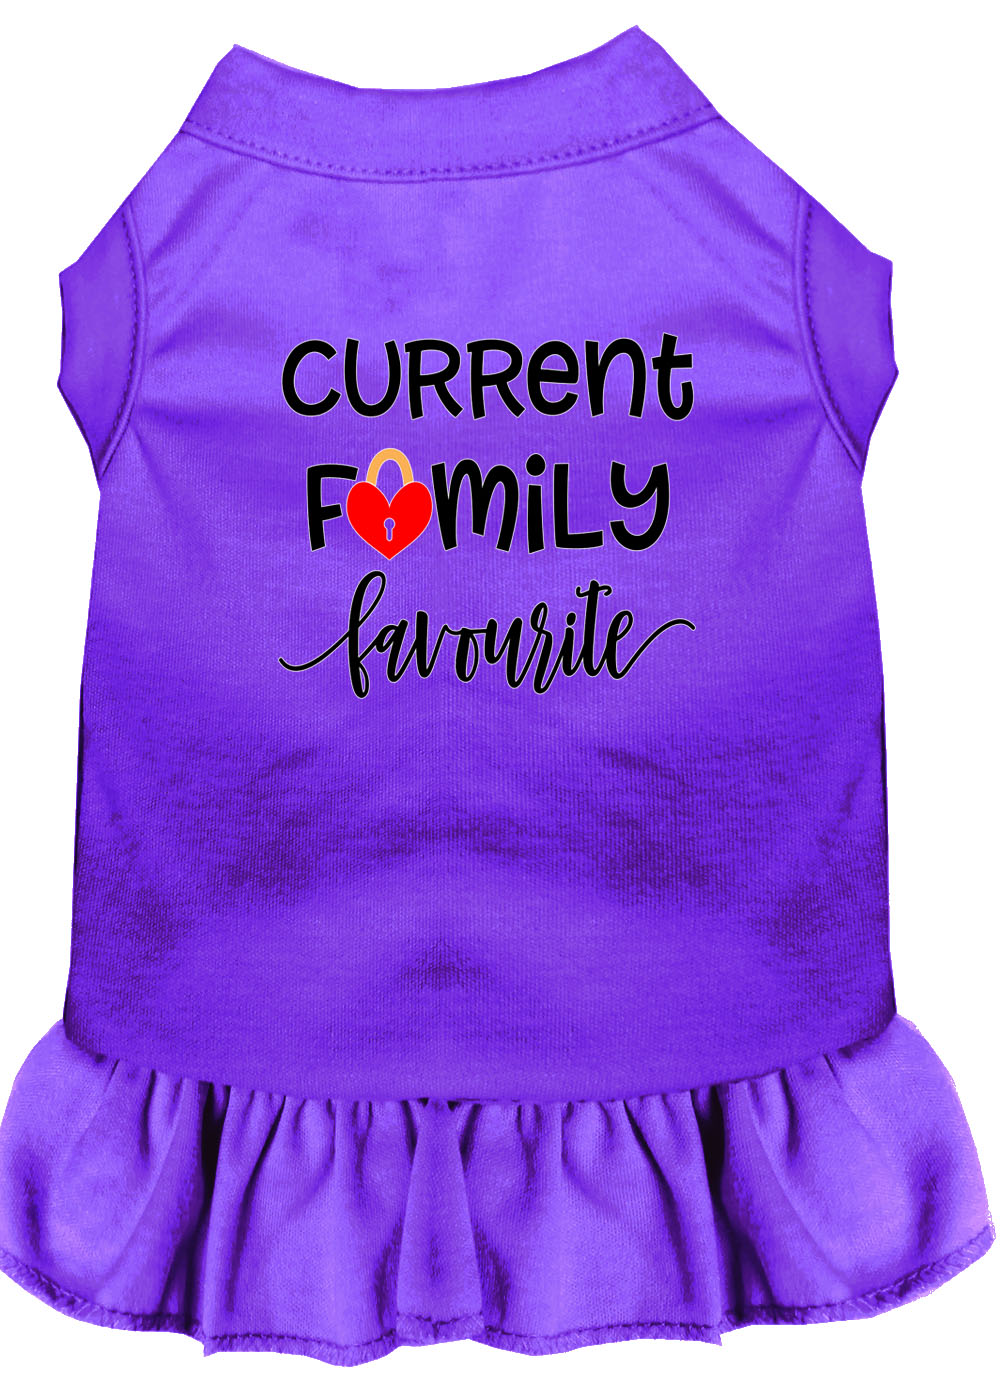 Family Favorite Screen Print Dog Dress Purple Lg